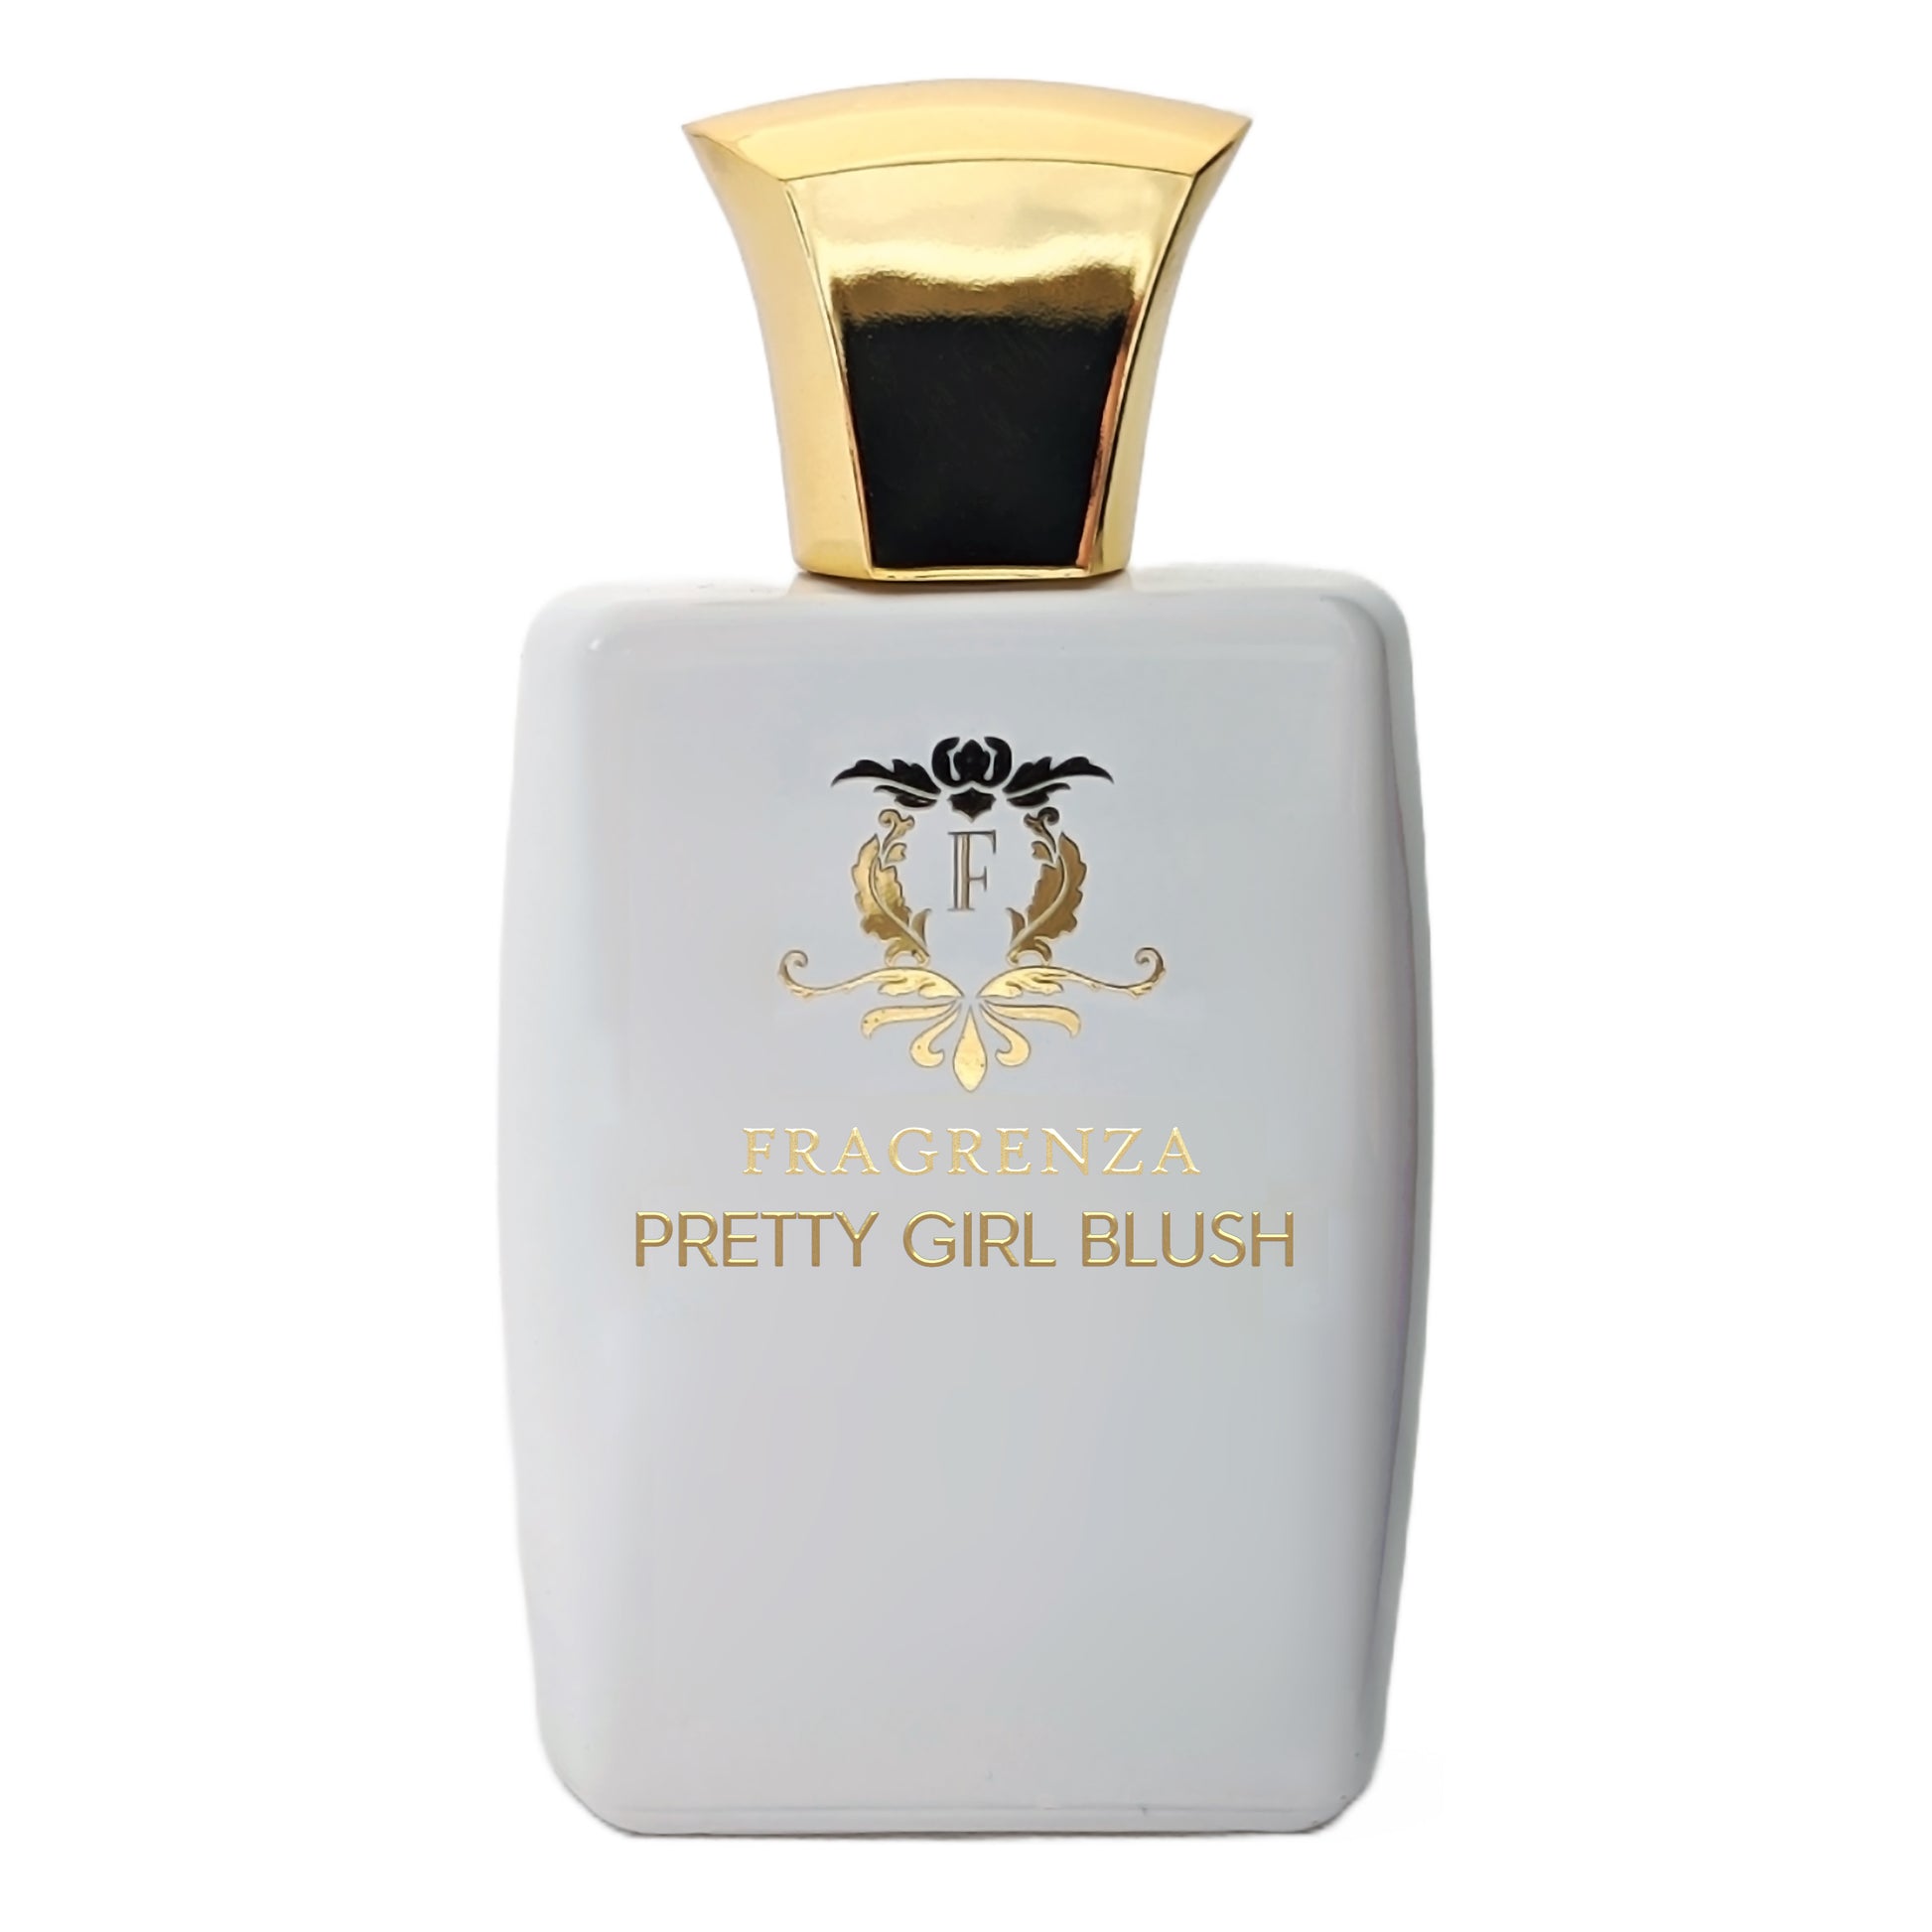 Good Girl Blush by Carolina Herrera eau de Parfum